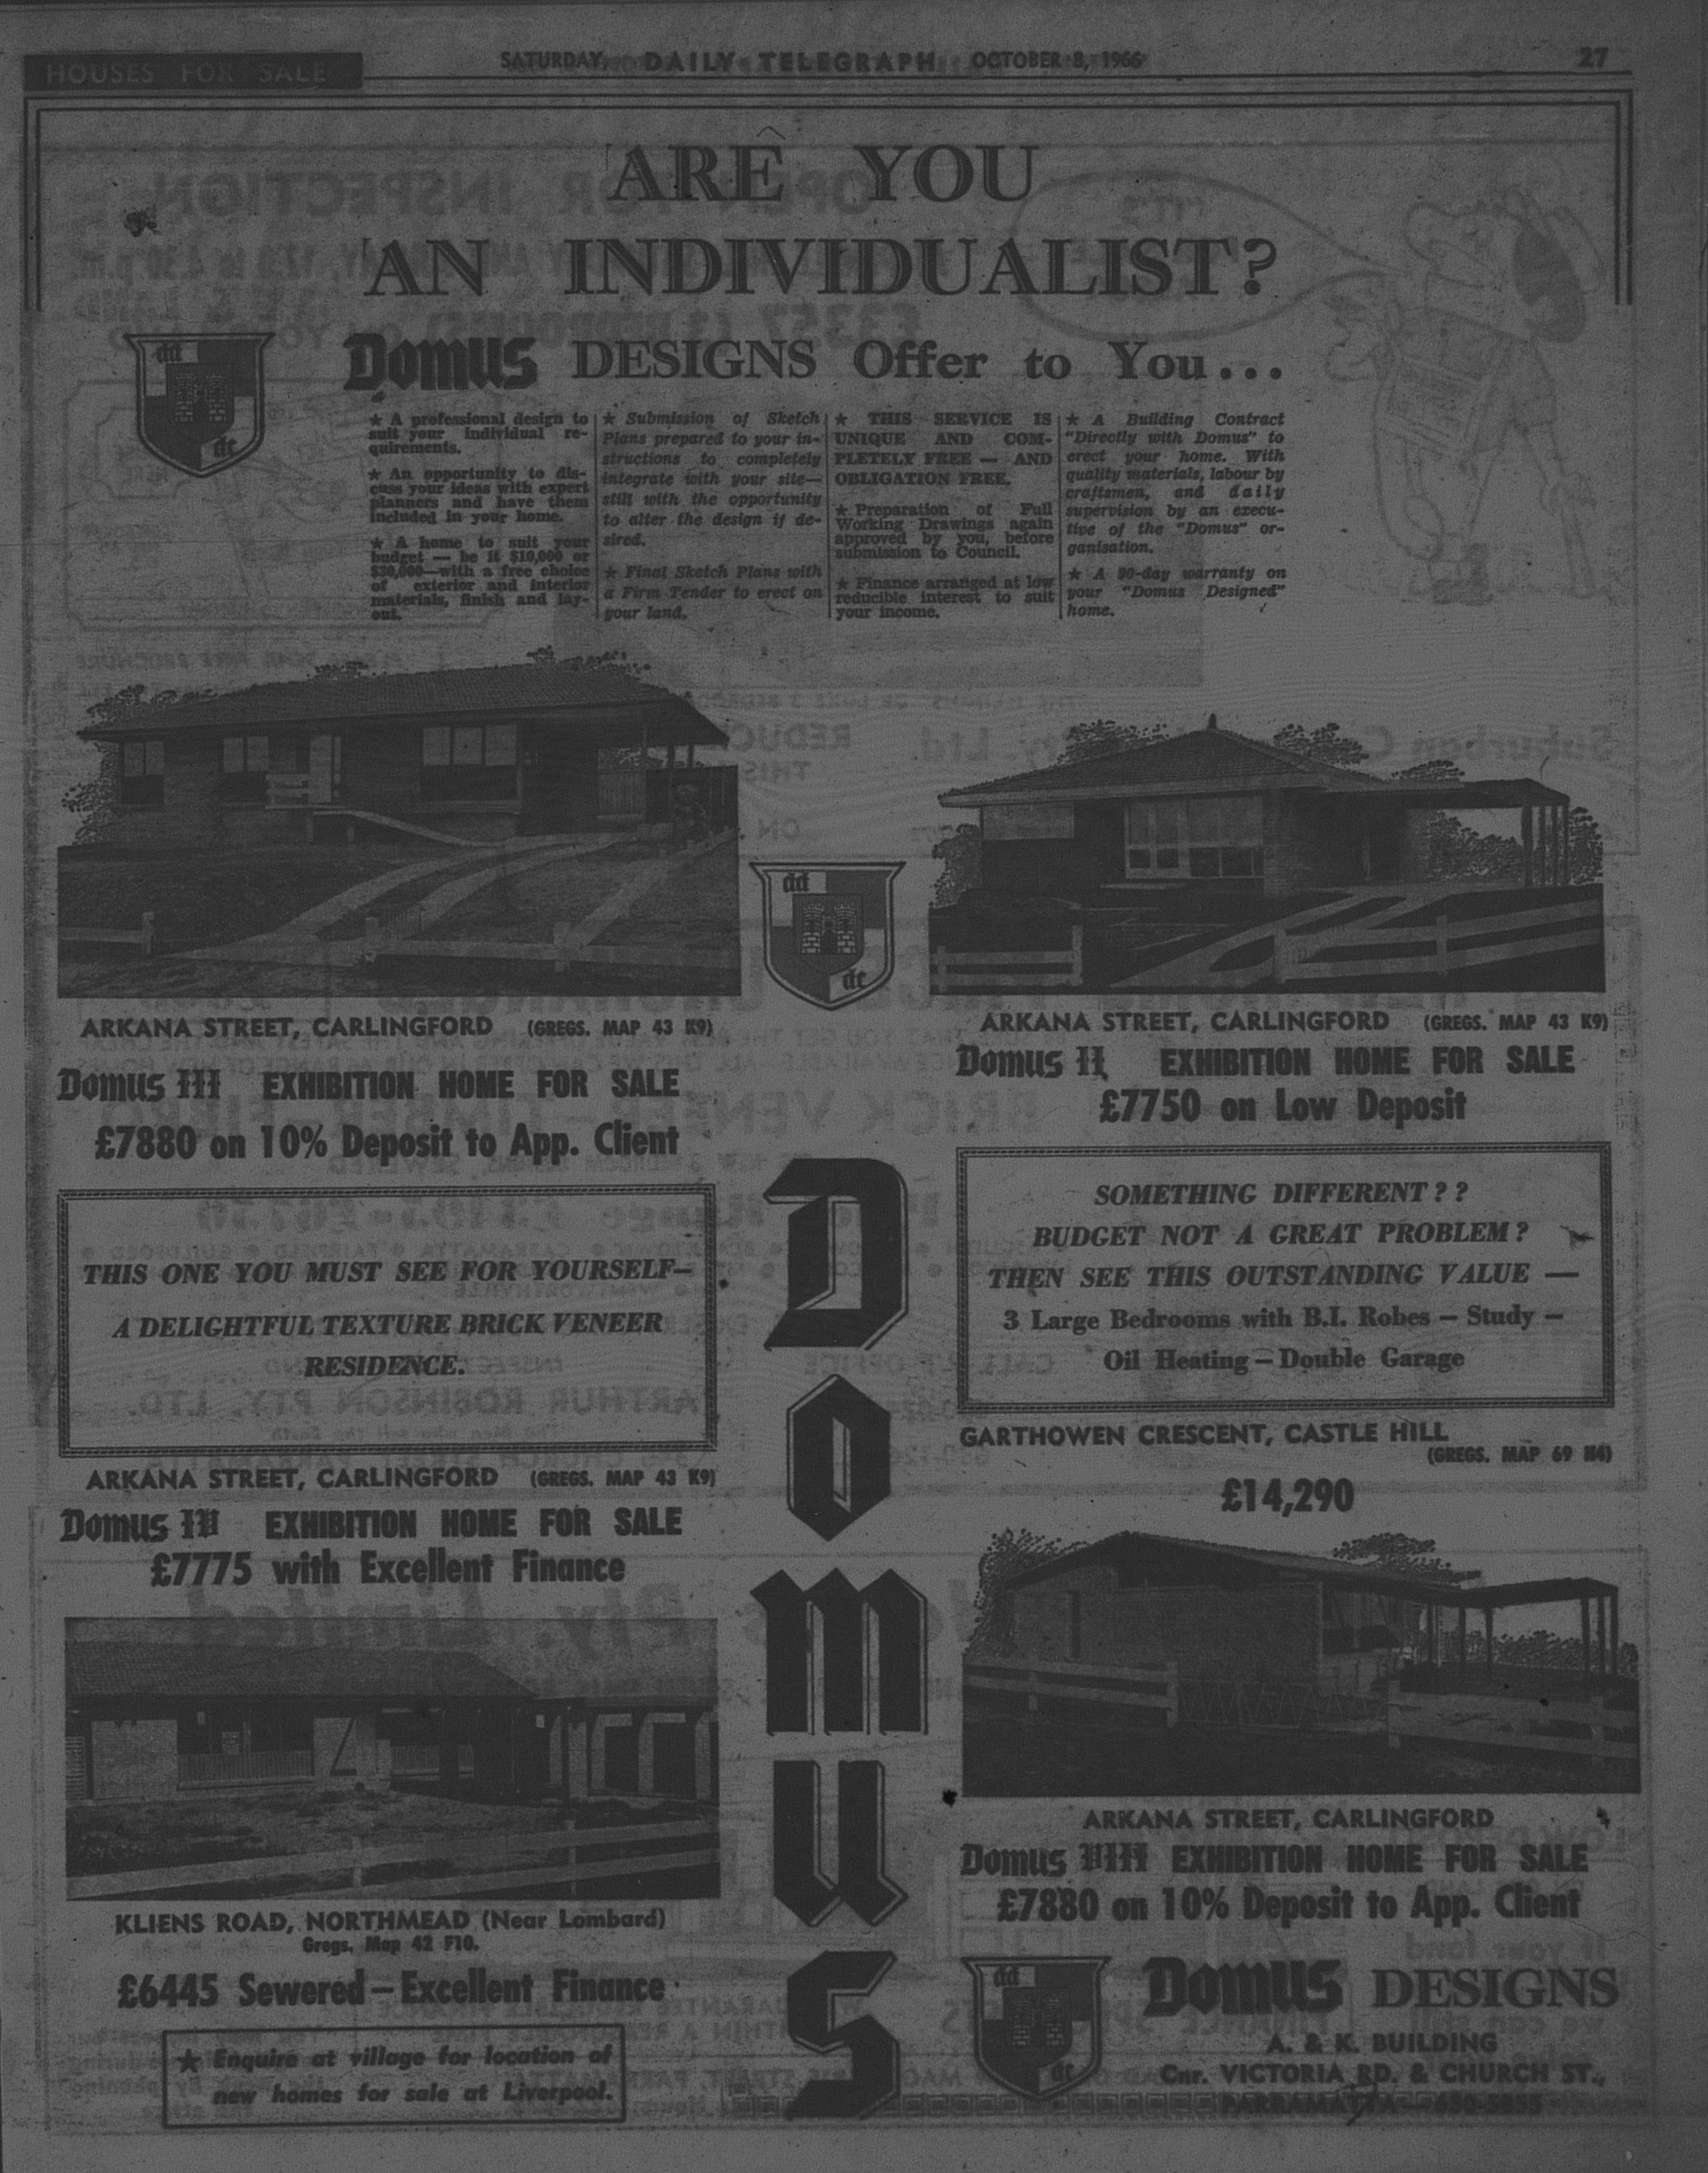 Domus Ad  October 8 1966 daily telegraph 27